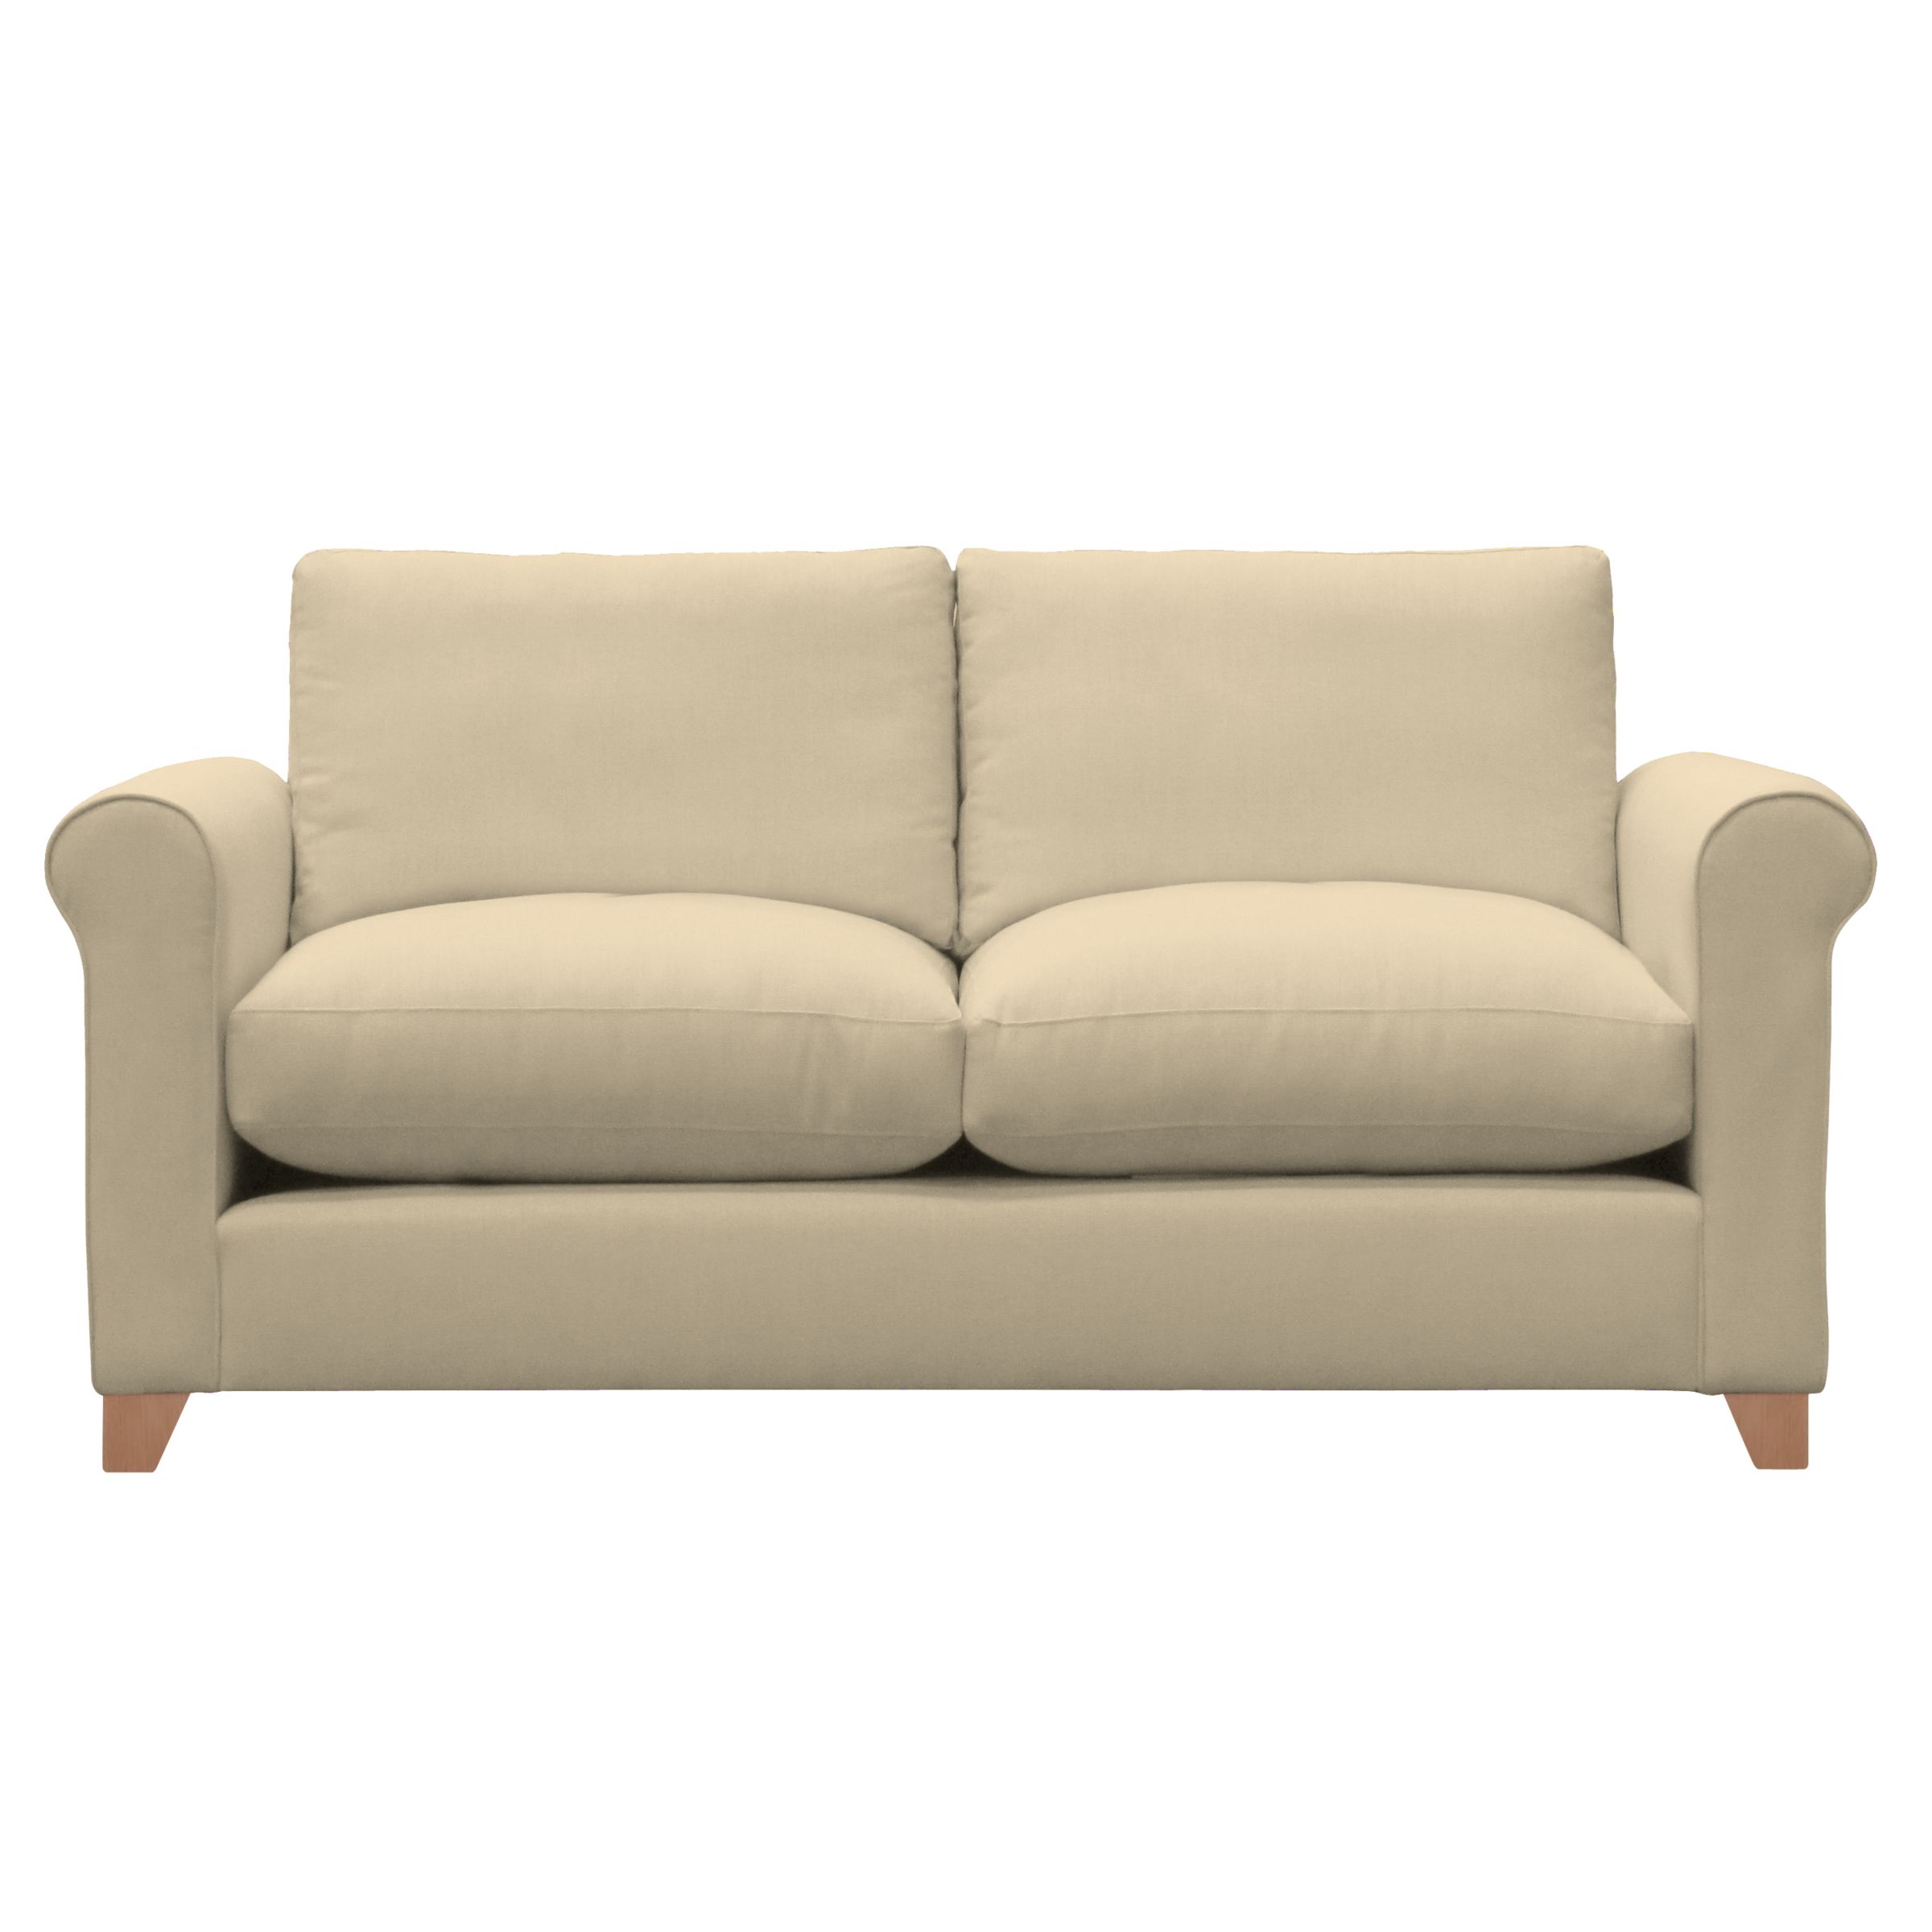 John Lewis Options Scroll Arm Medium Sofa, Eaton Taupe, width 175cm